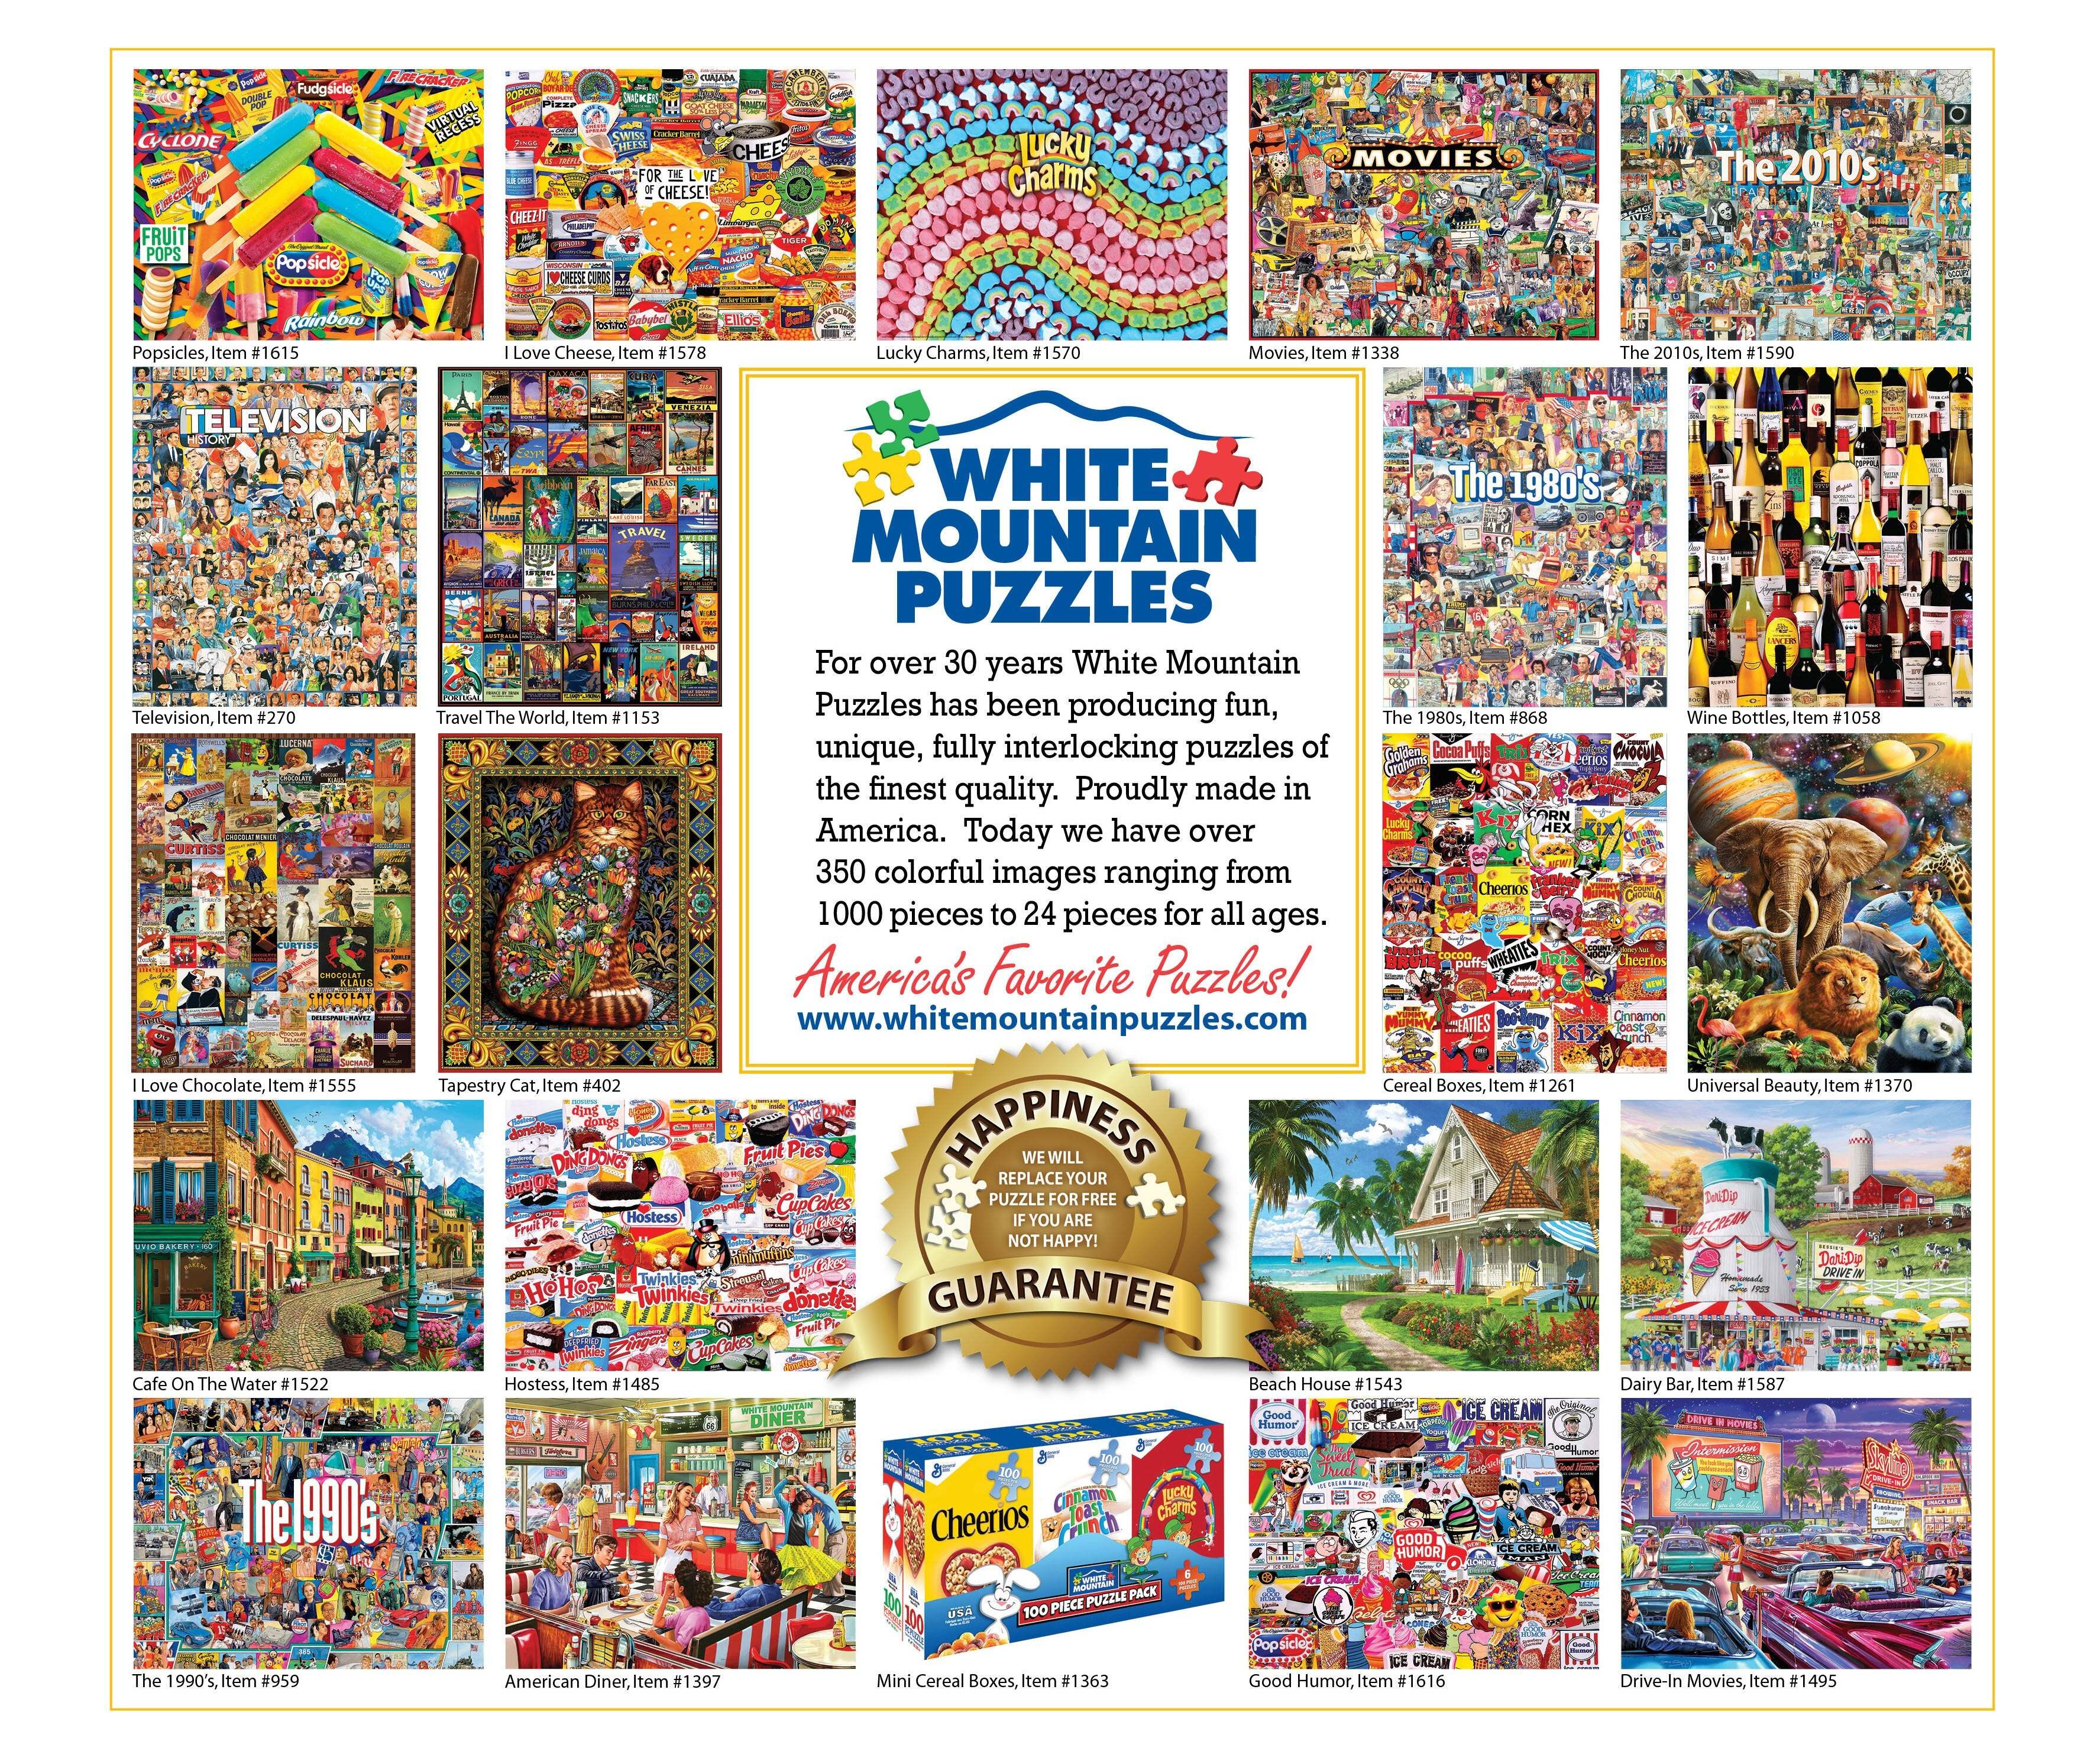 Mountain Chalet (1743pz) - 1000 Piece Jigsaw Puzzle